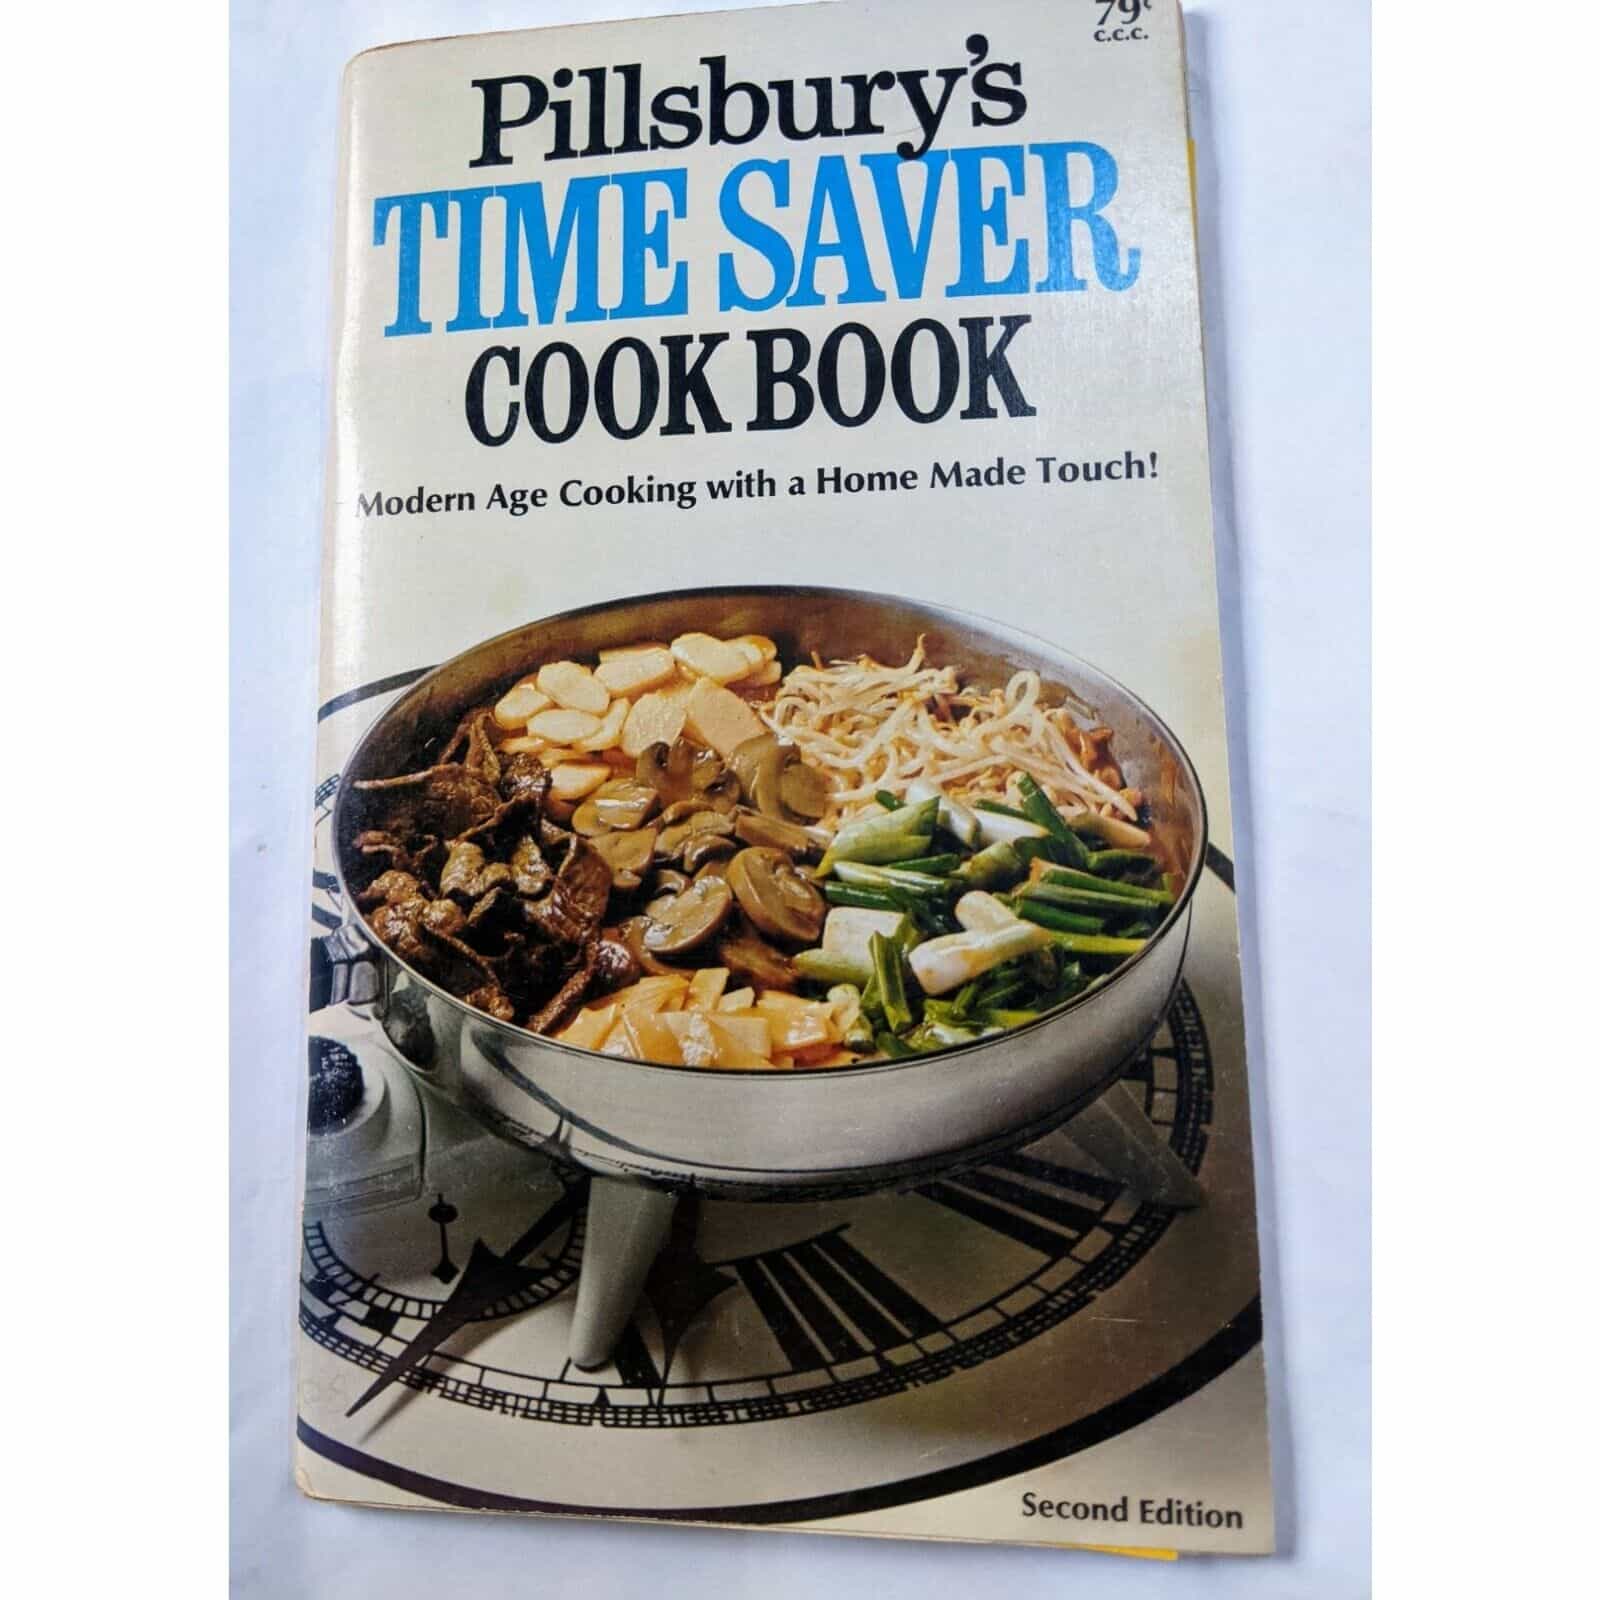 Pillsbury’s Time Saver Antique Cook Book